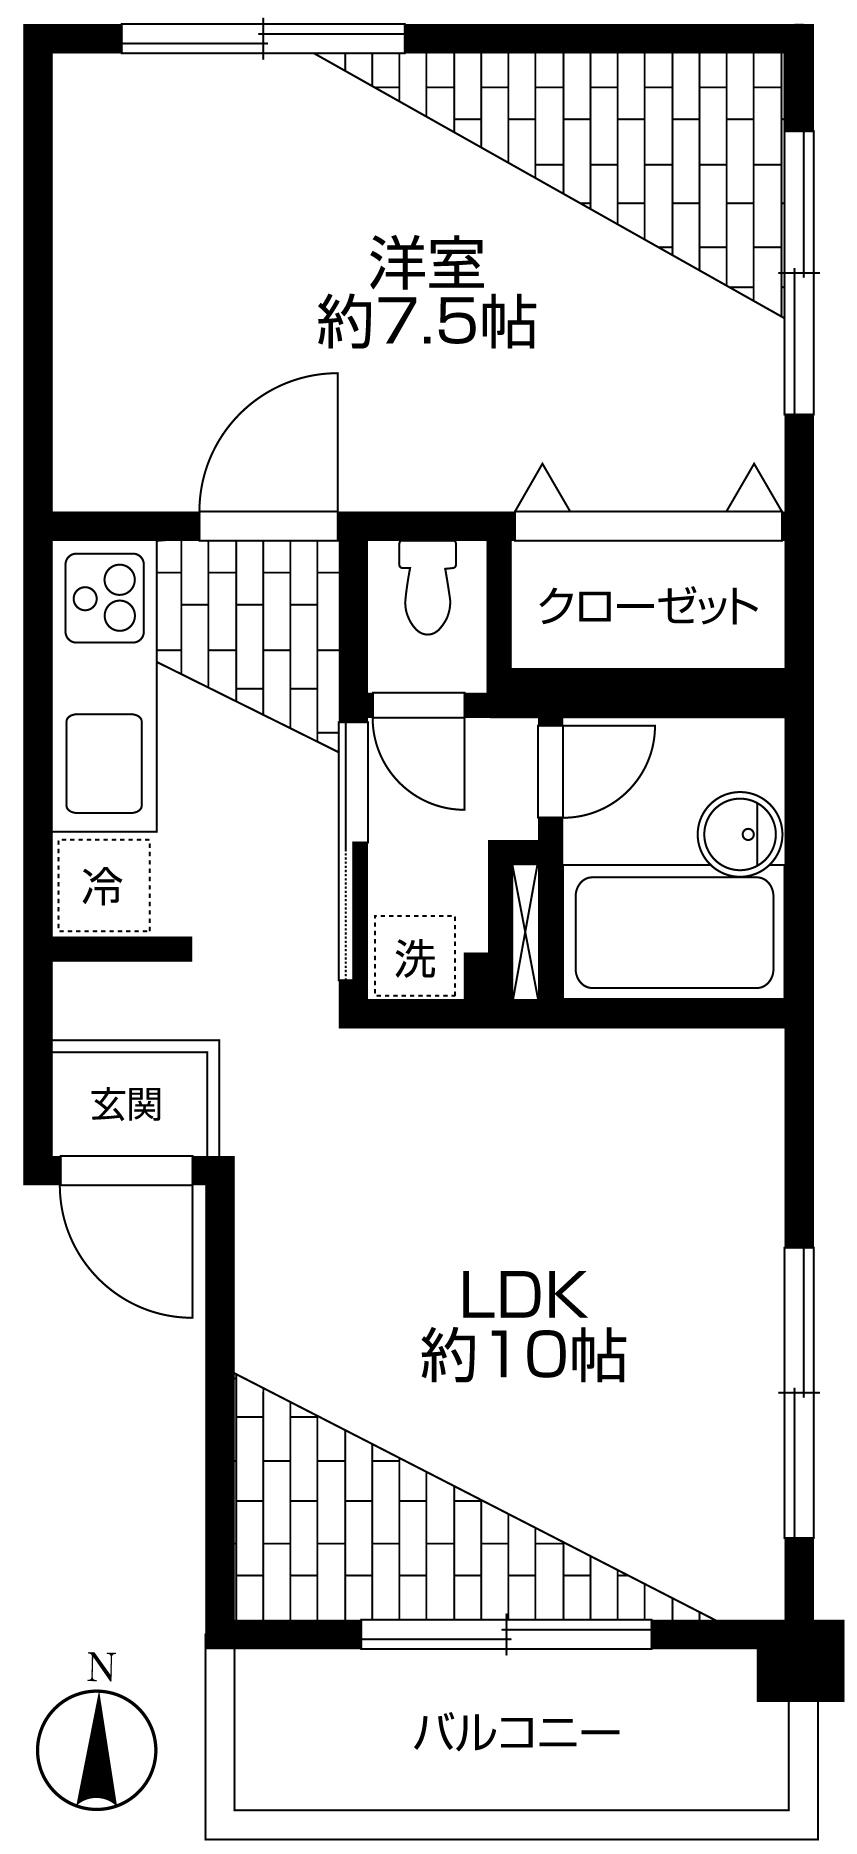 Floor plan. 1LDK, Price 11.8 million yen, Occupied area 39.01 sq m , Balcony area 3.4 sq m